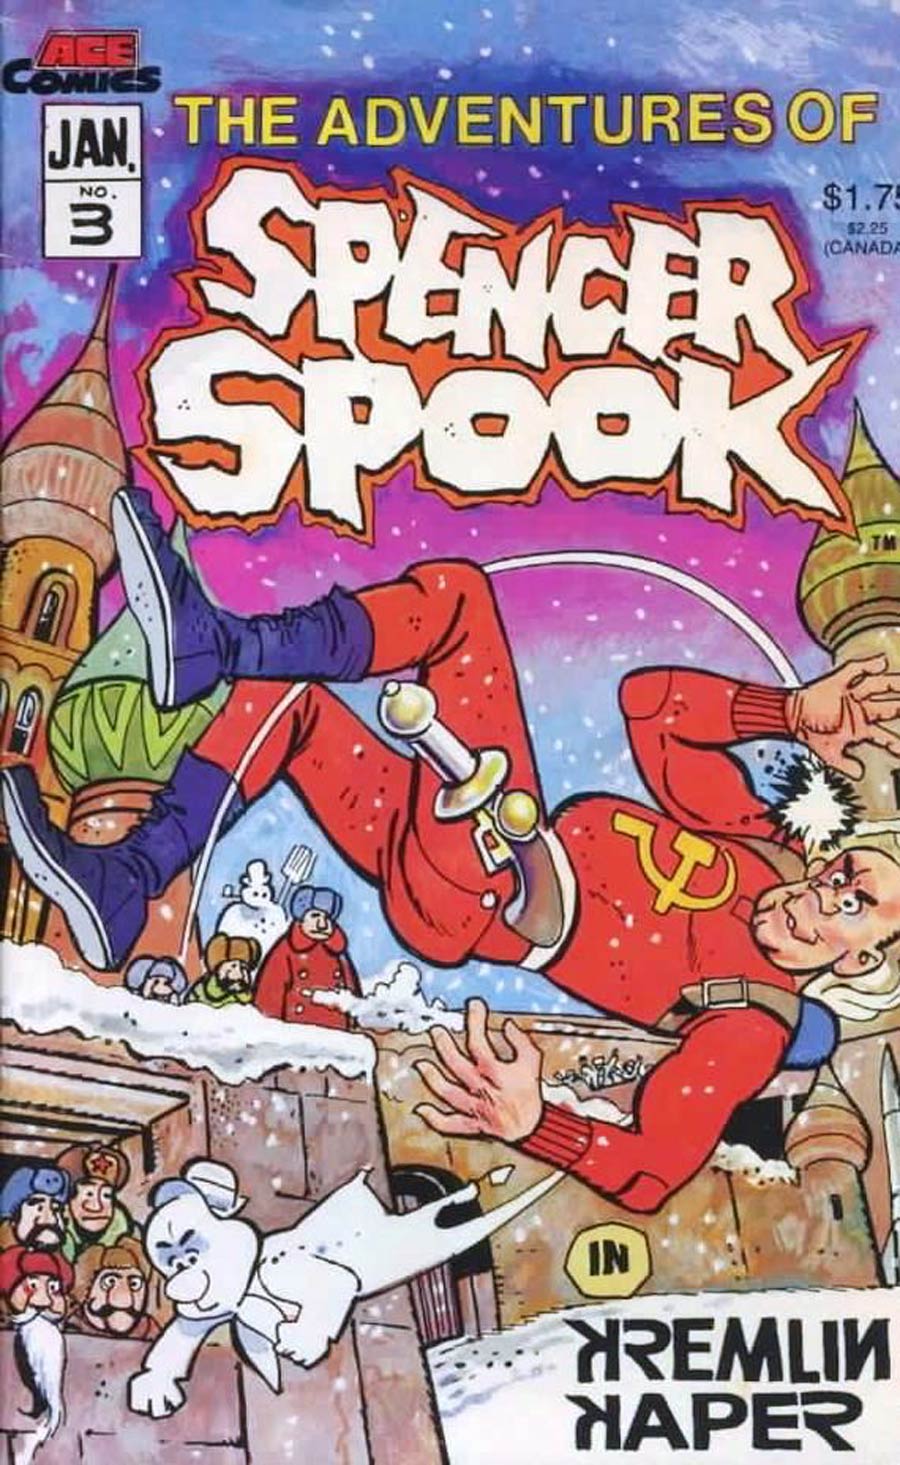 Adventures of Spencer Spook #3